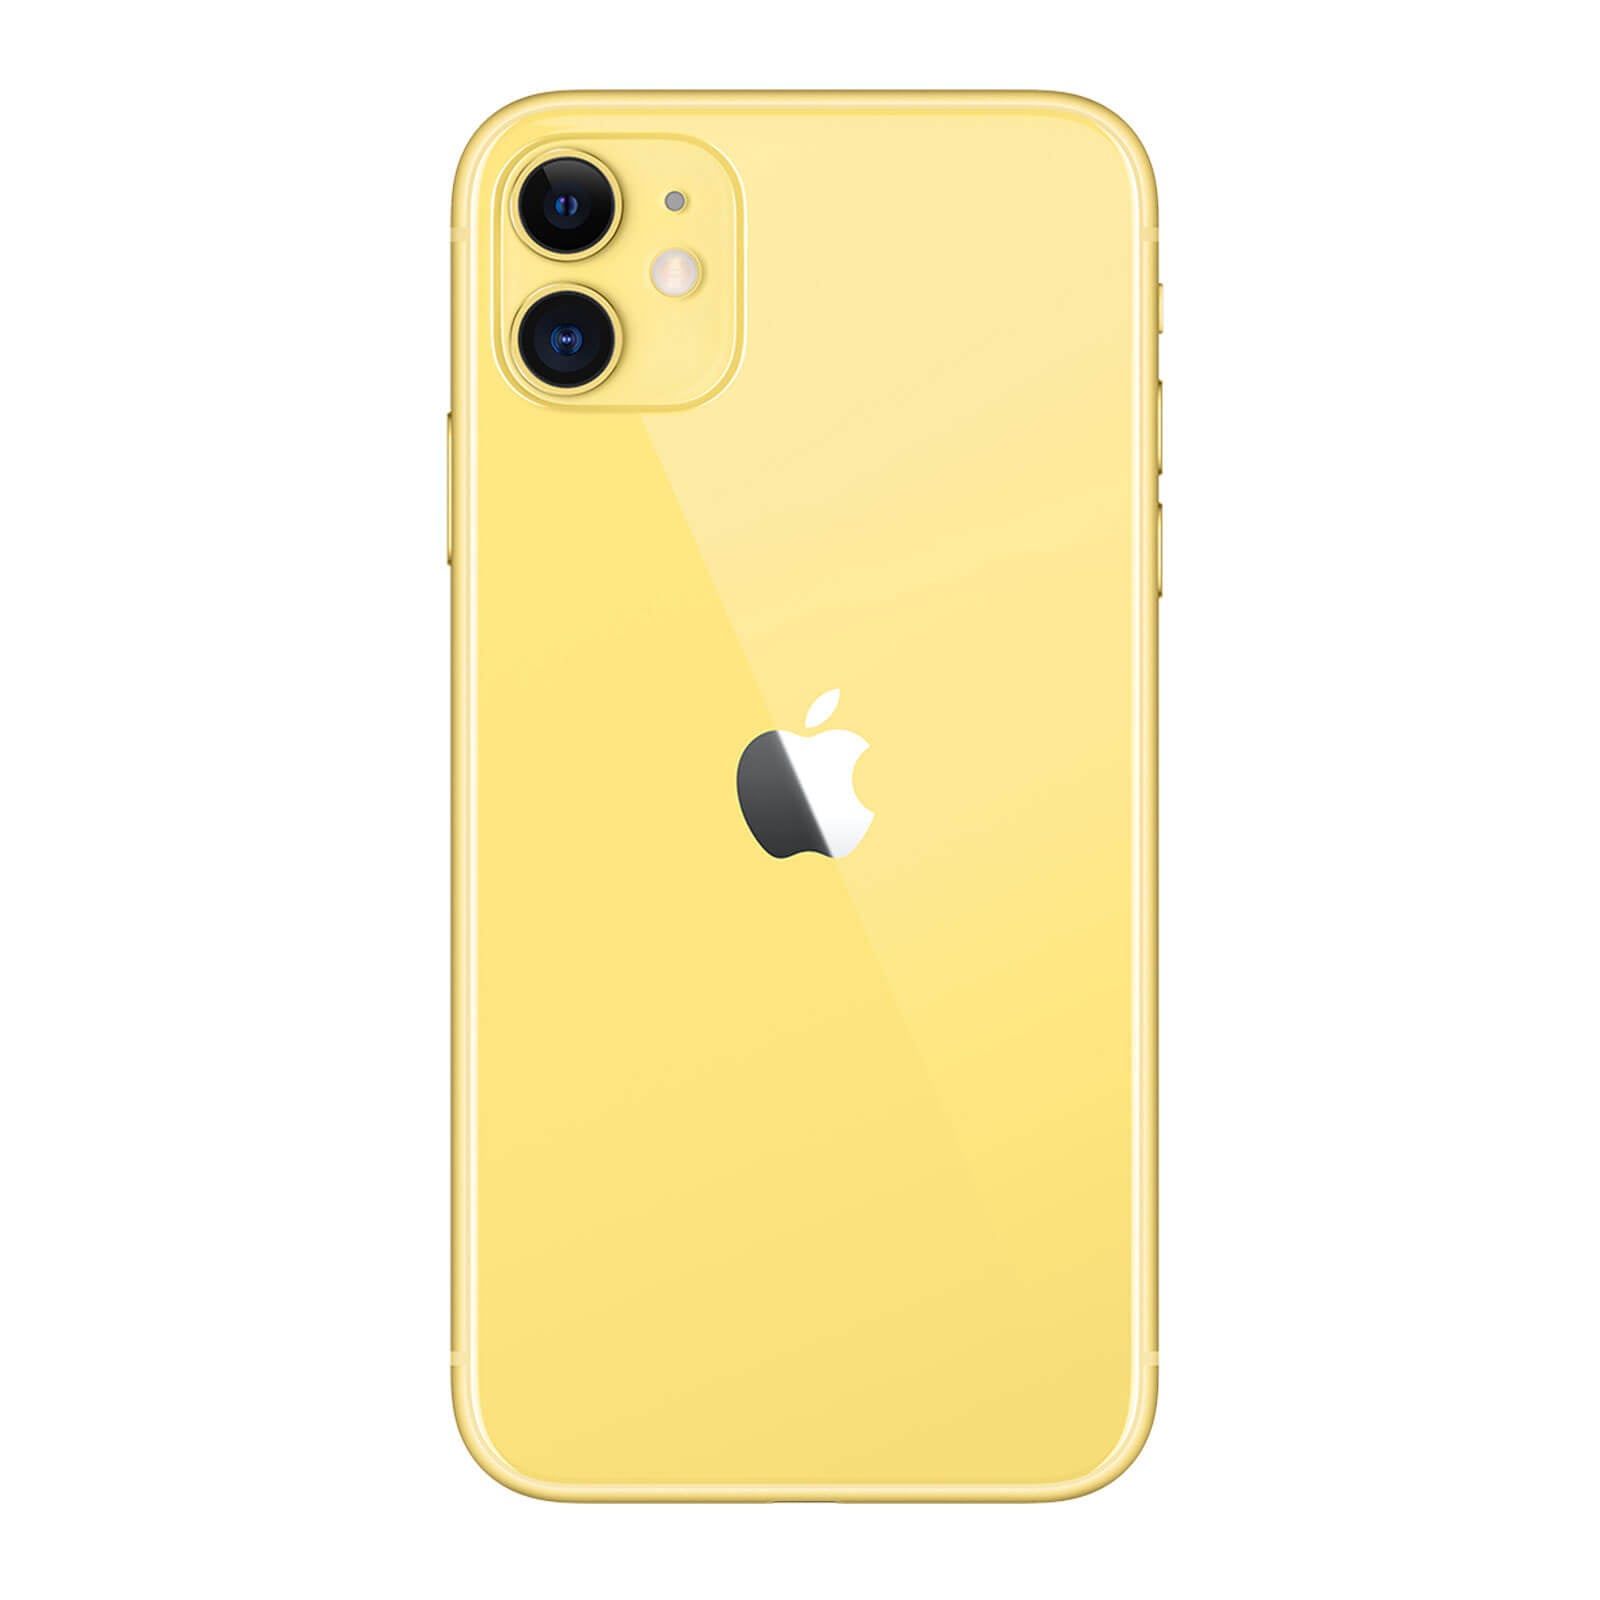 Apple iPhone 11 128GB Yellow Good - AT&T